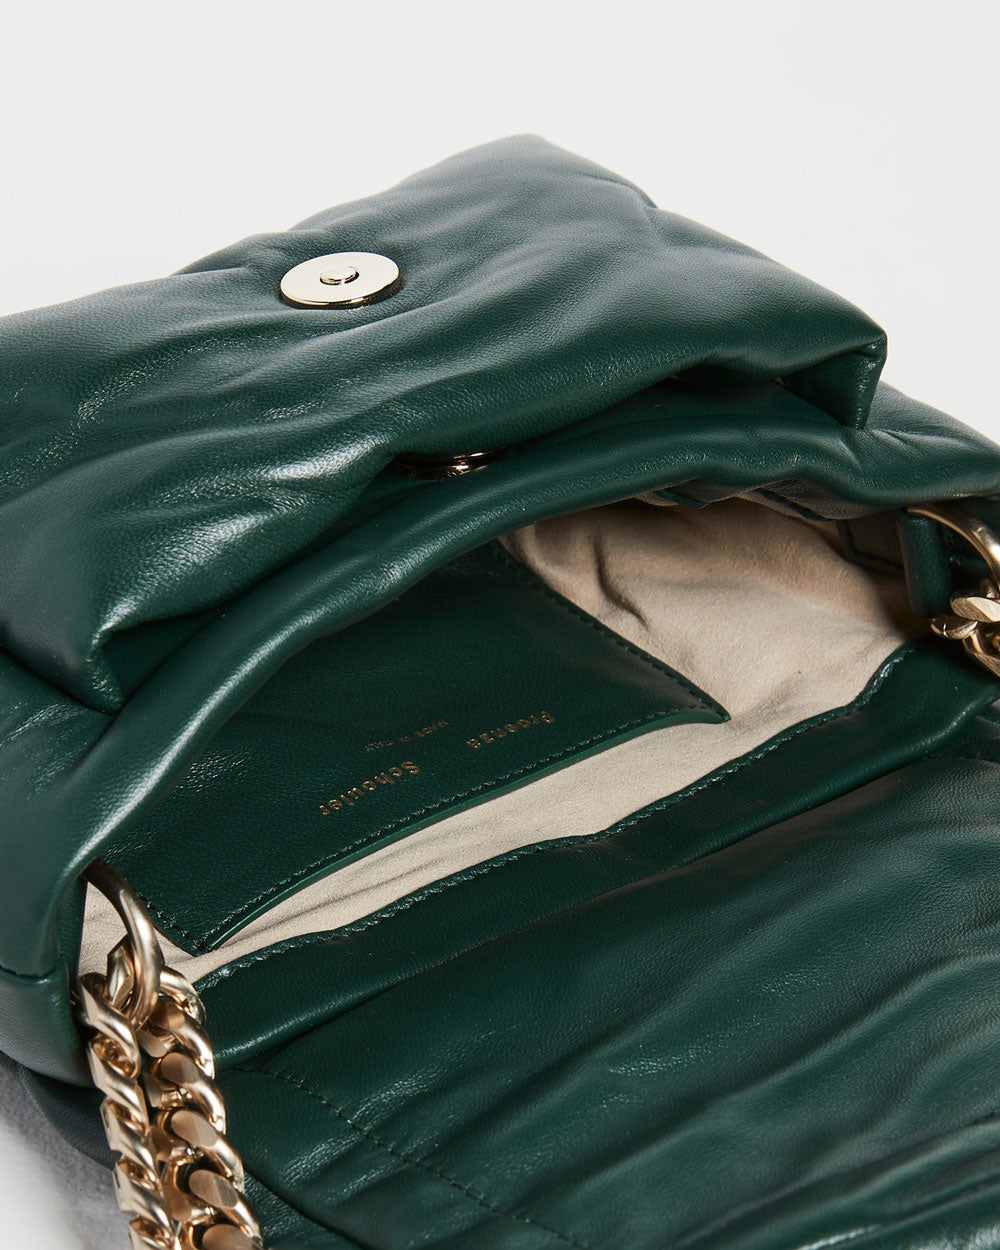 Dark Green Puffy Chain Tobo Bag